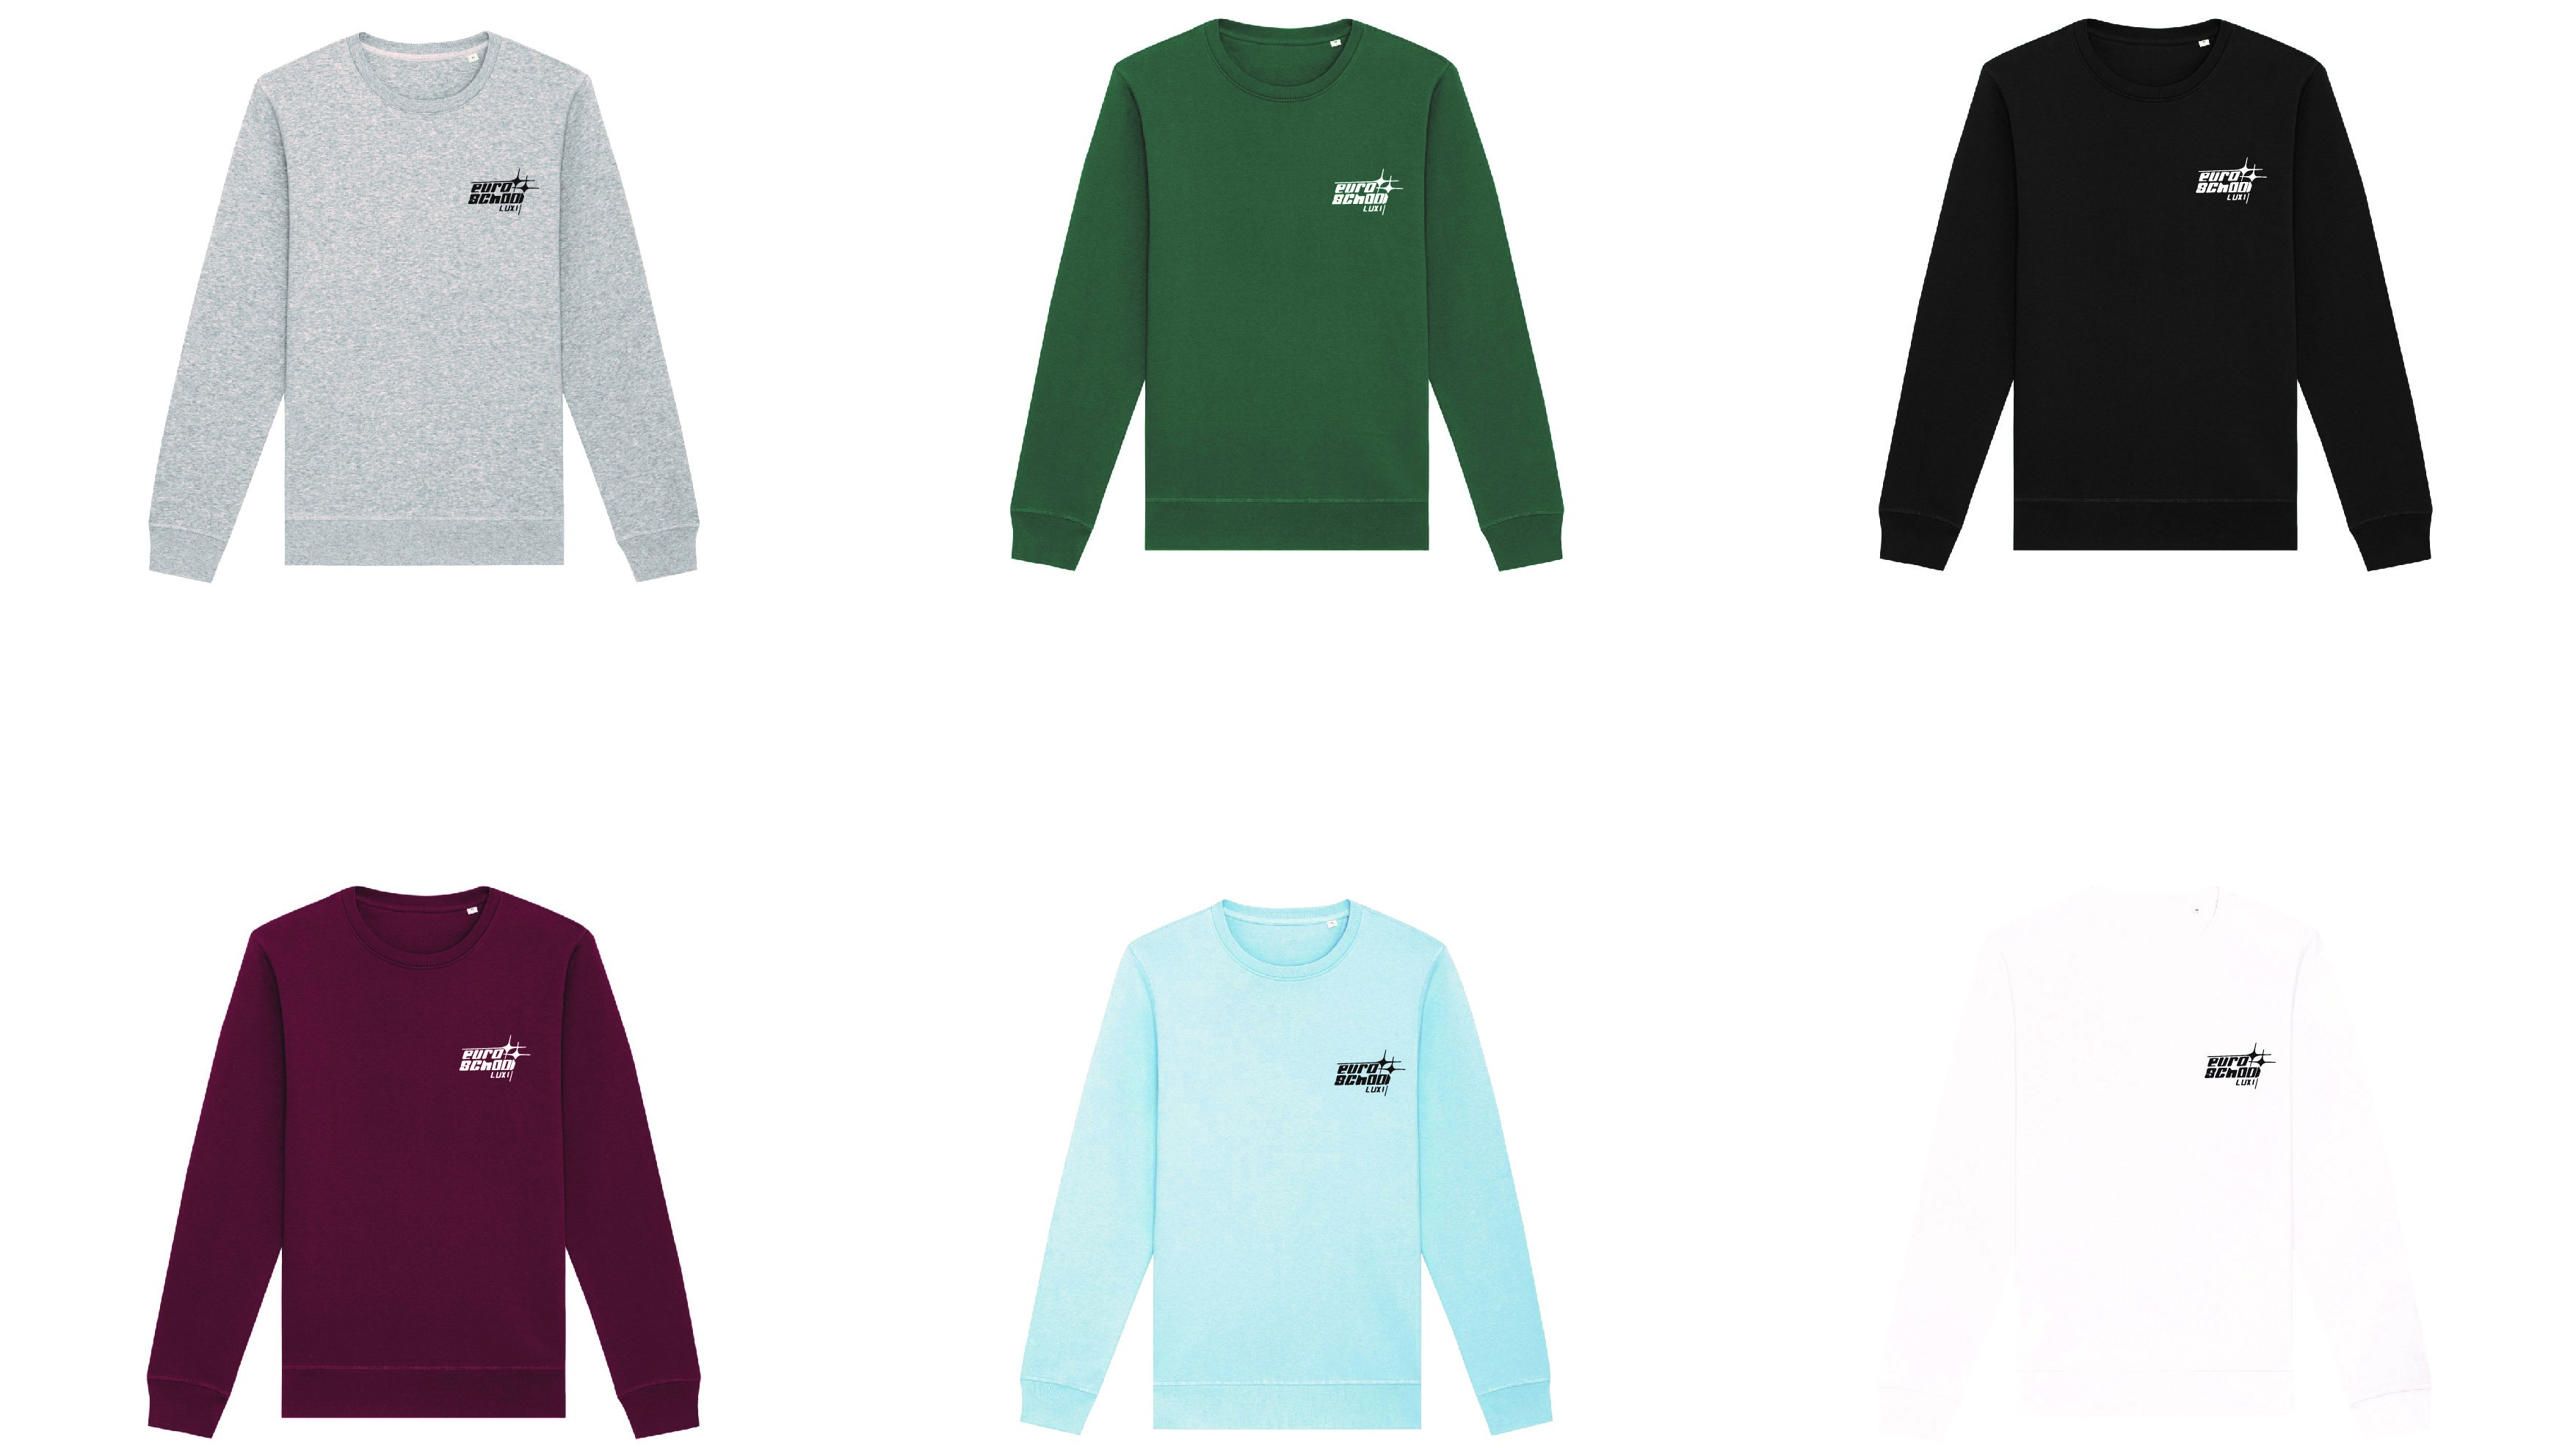 Black, White, Sky Blue, Bottle Green, Burgundy and Heather Grey Sweatshirts